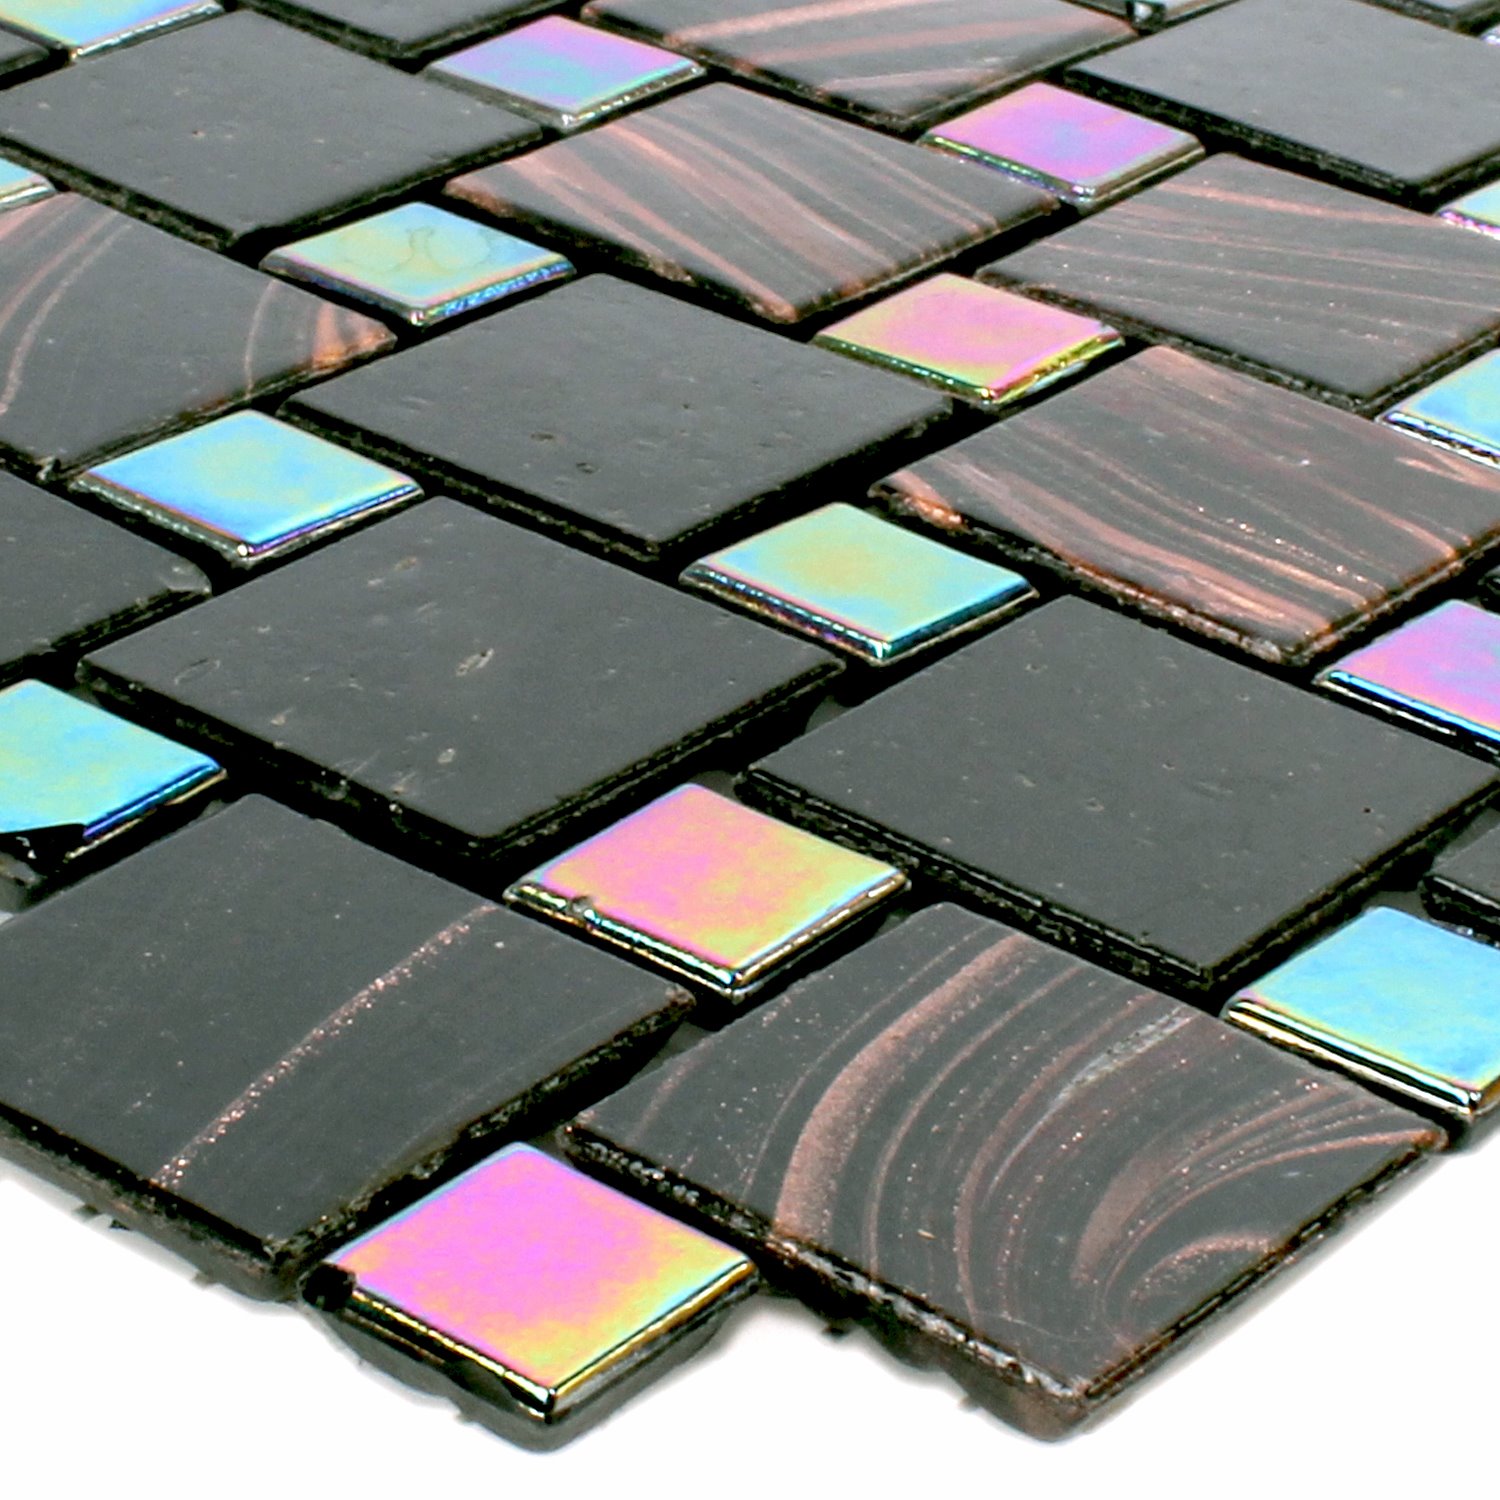 Sample Mosaic Tiles Glass Tahiti Brown Black Metallic